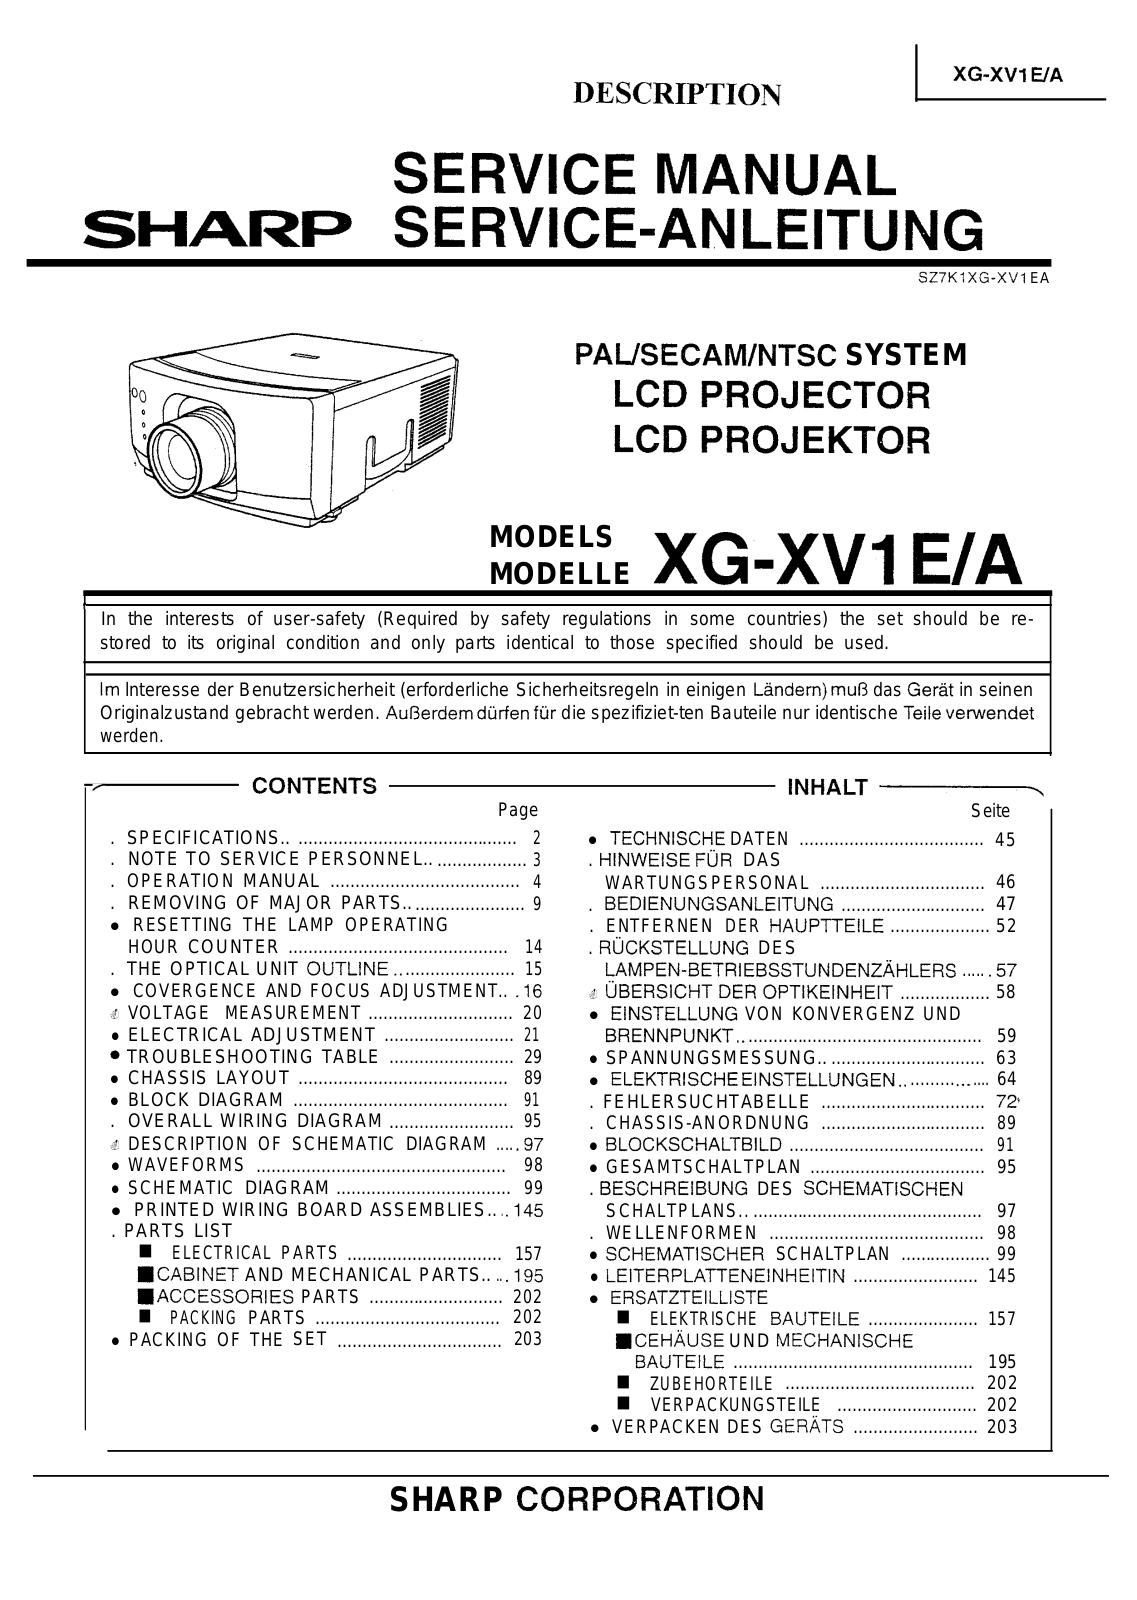 Sharp XG-XV1 Service Manual